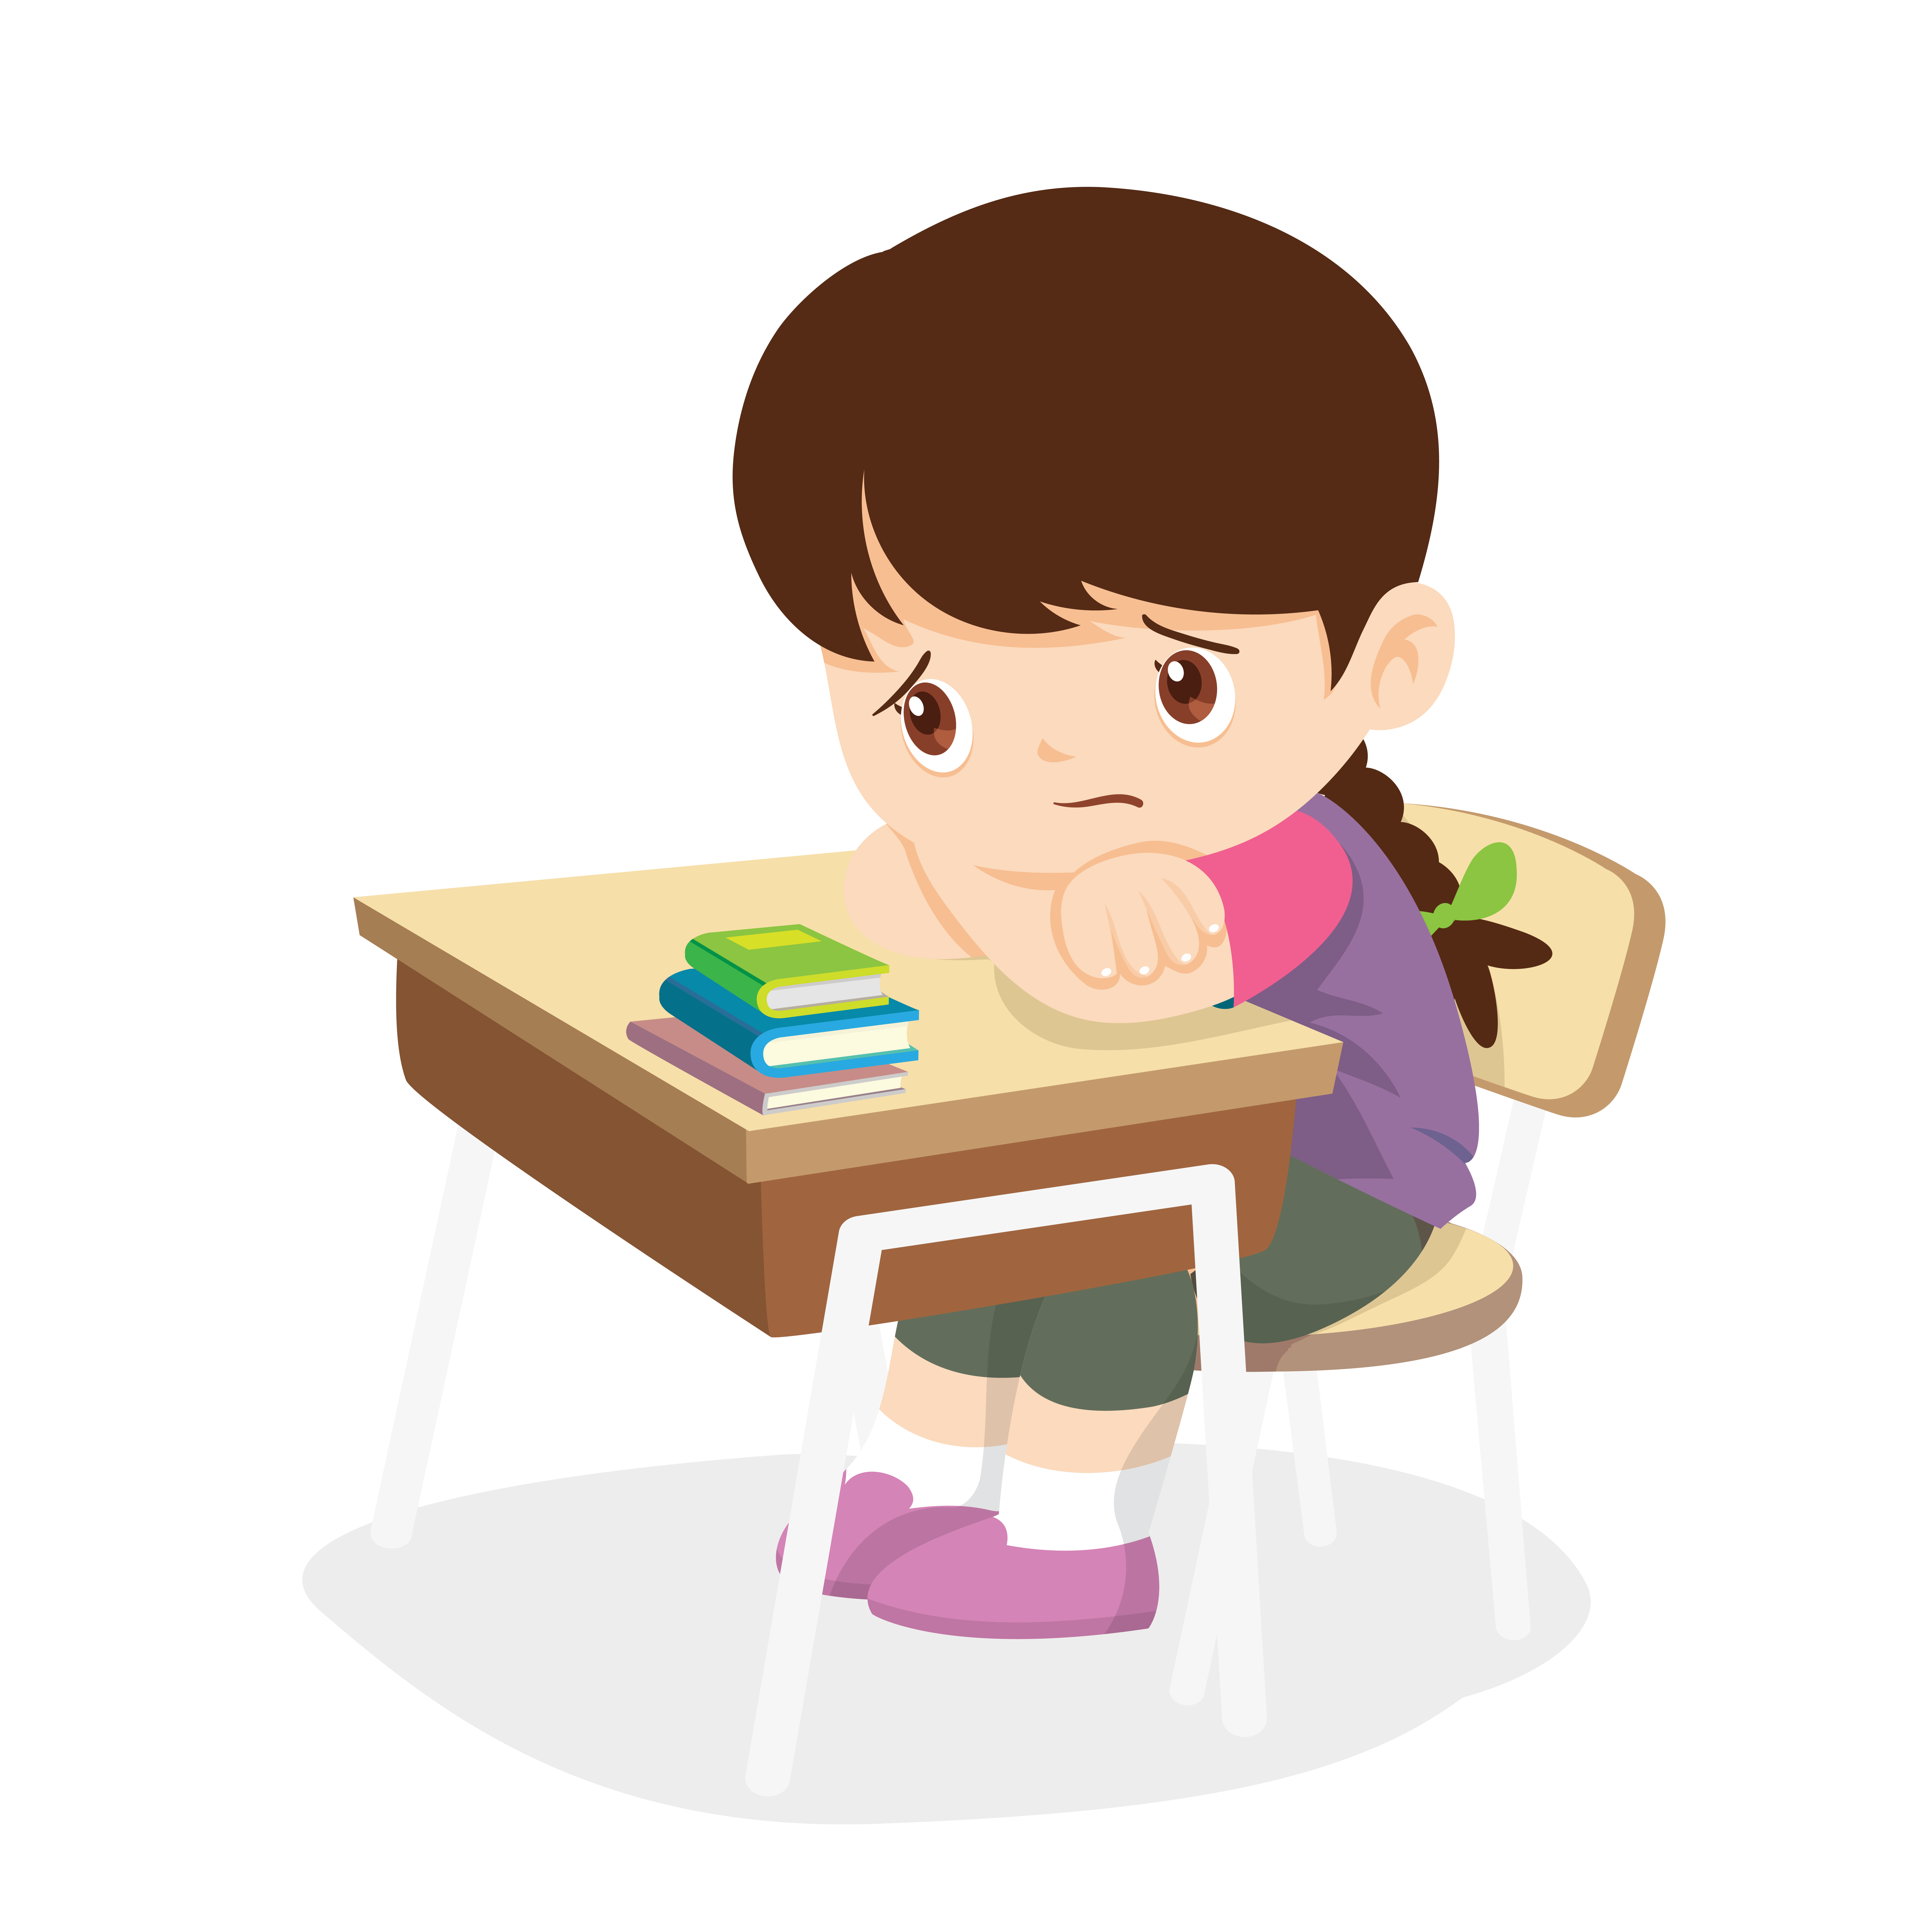 illustration of an upset child sitting at a school desk